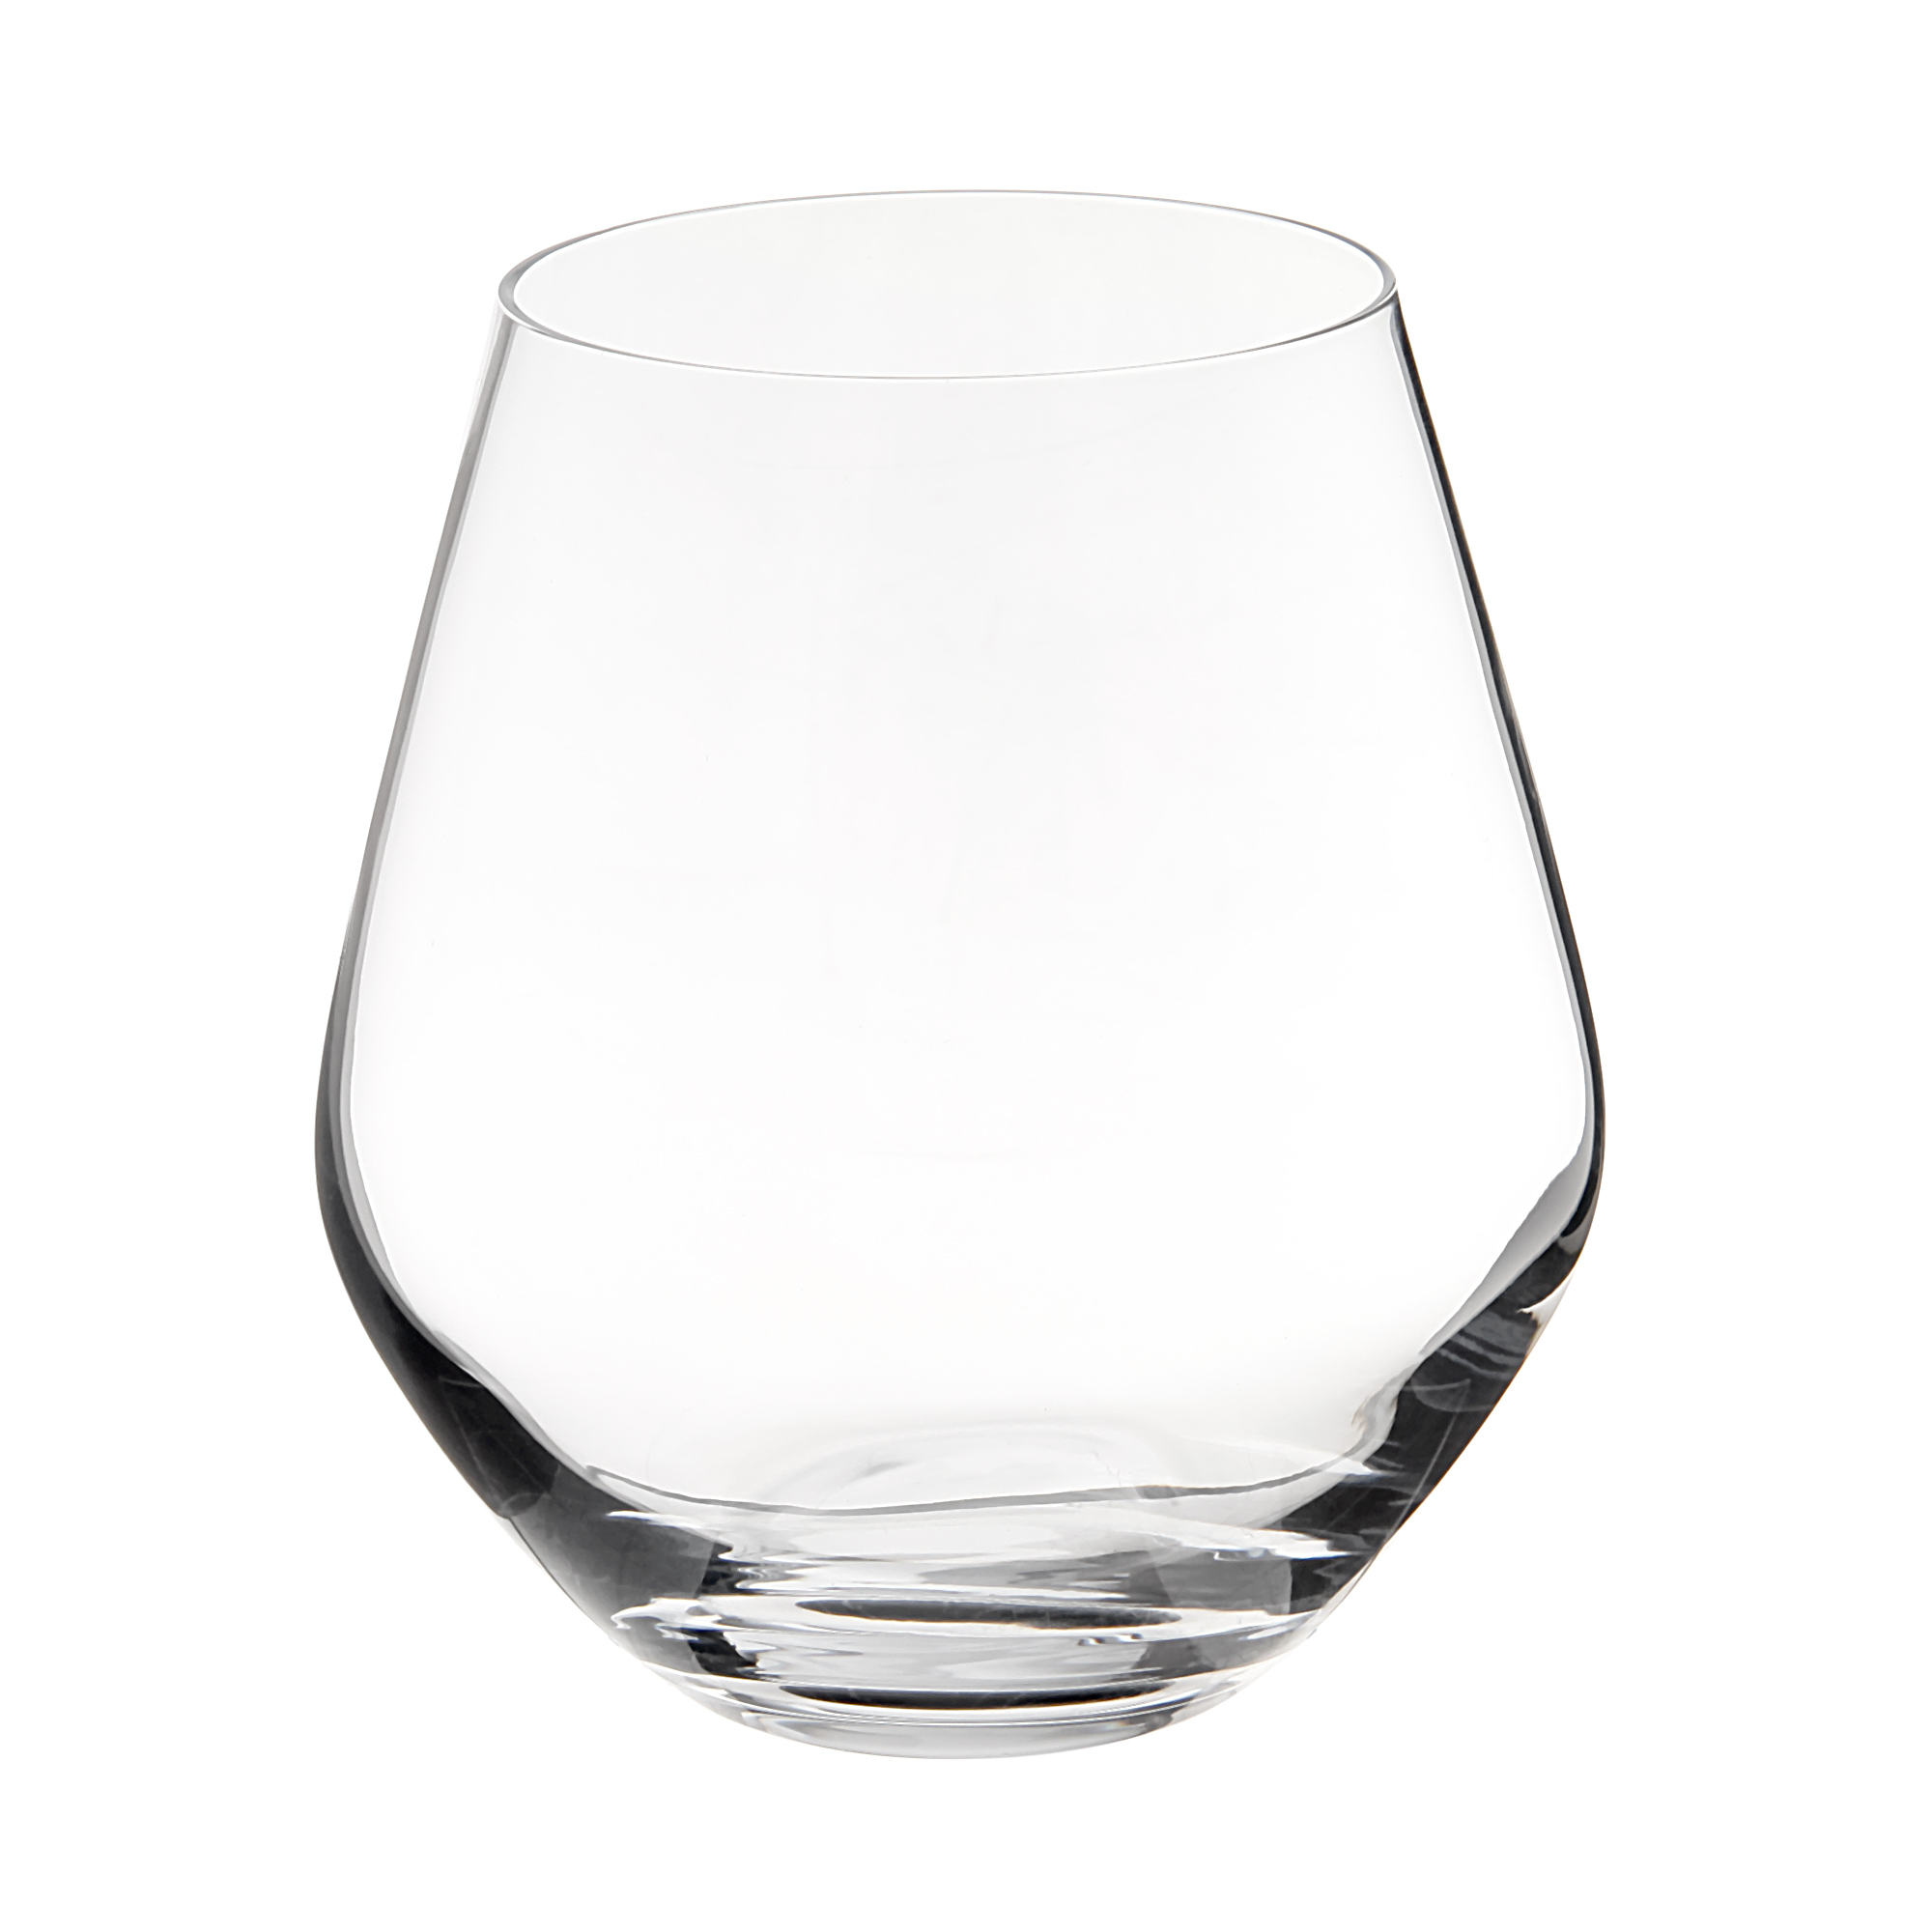 Набор стаканов для виски Crystalite bohemia Мишель 350 мл 6 шт набор для виски crystalite bohemia штоф 750 мл 6 стаканов 250 мл 990 99999 9 05101 690 709